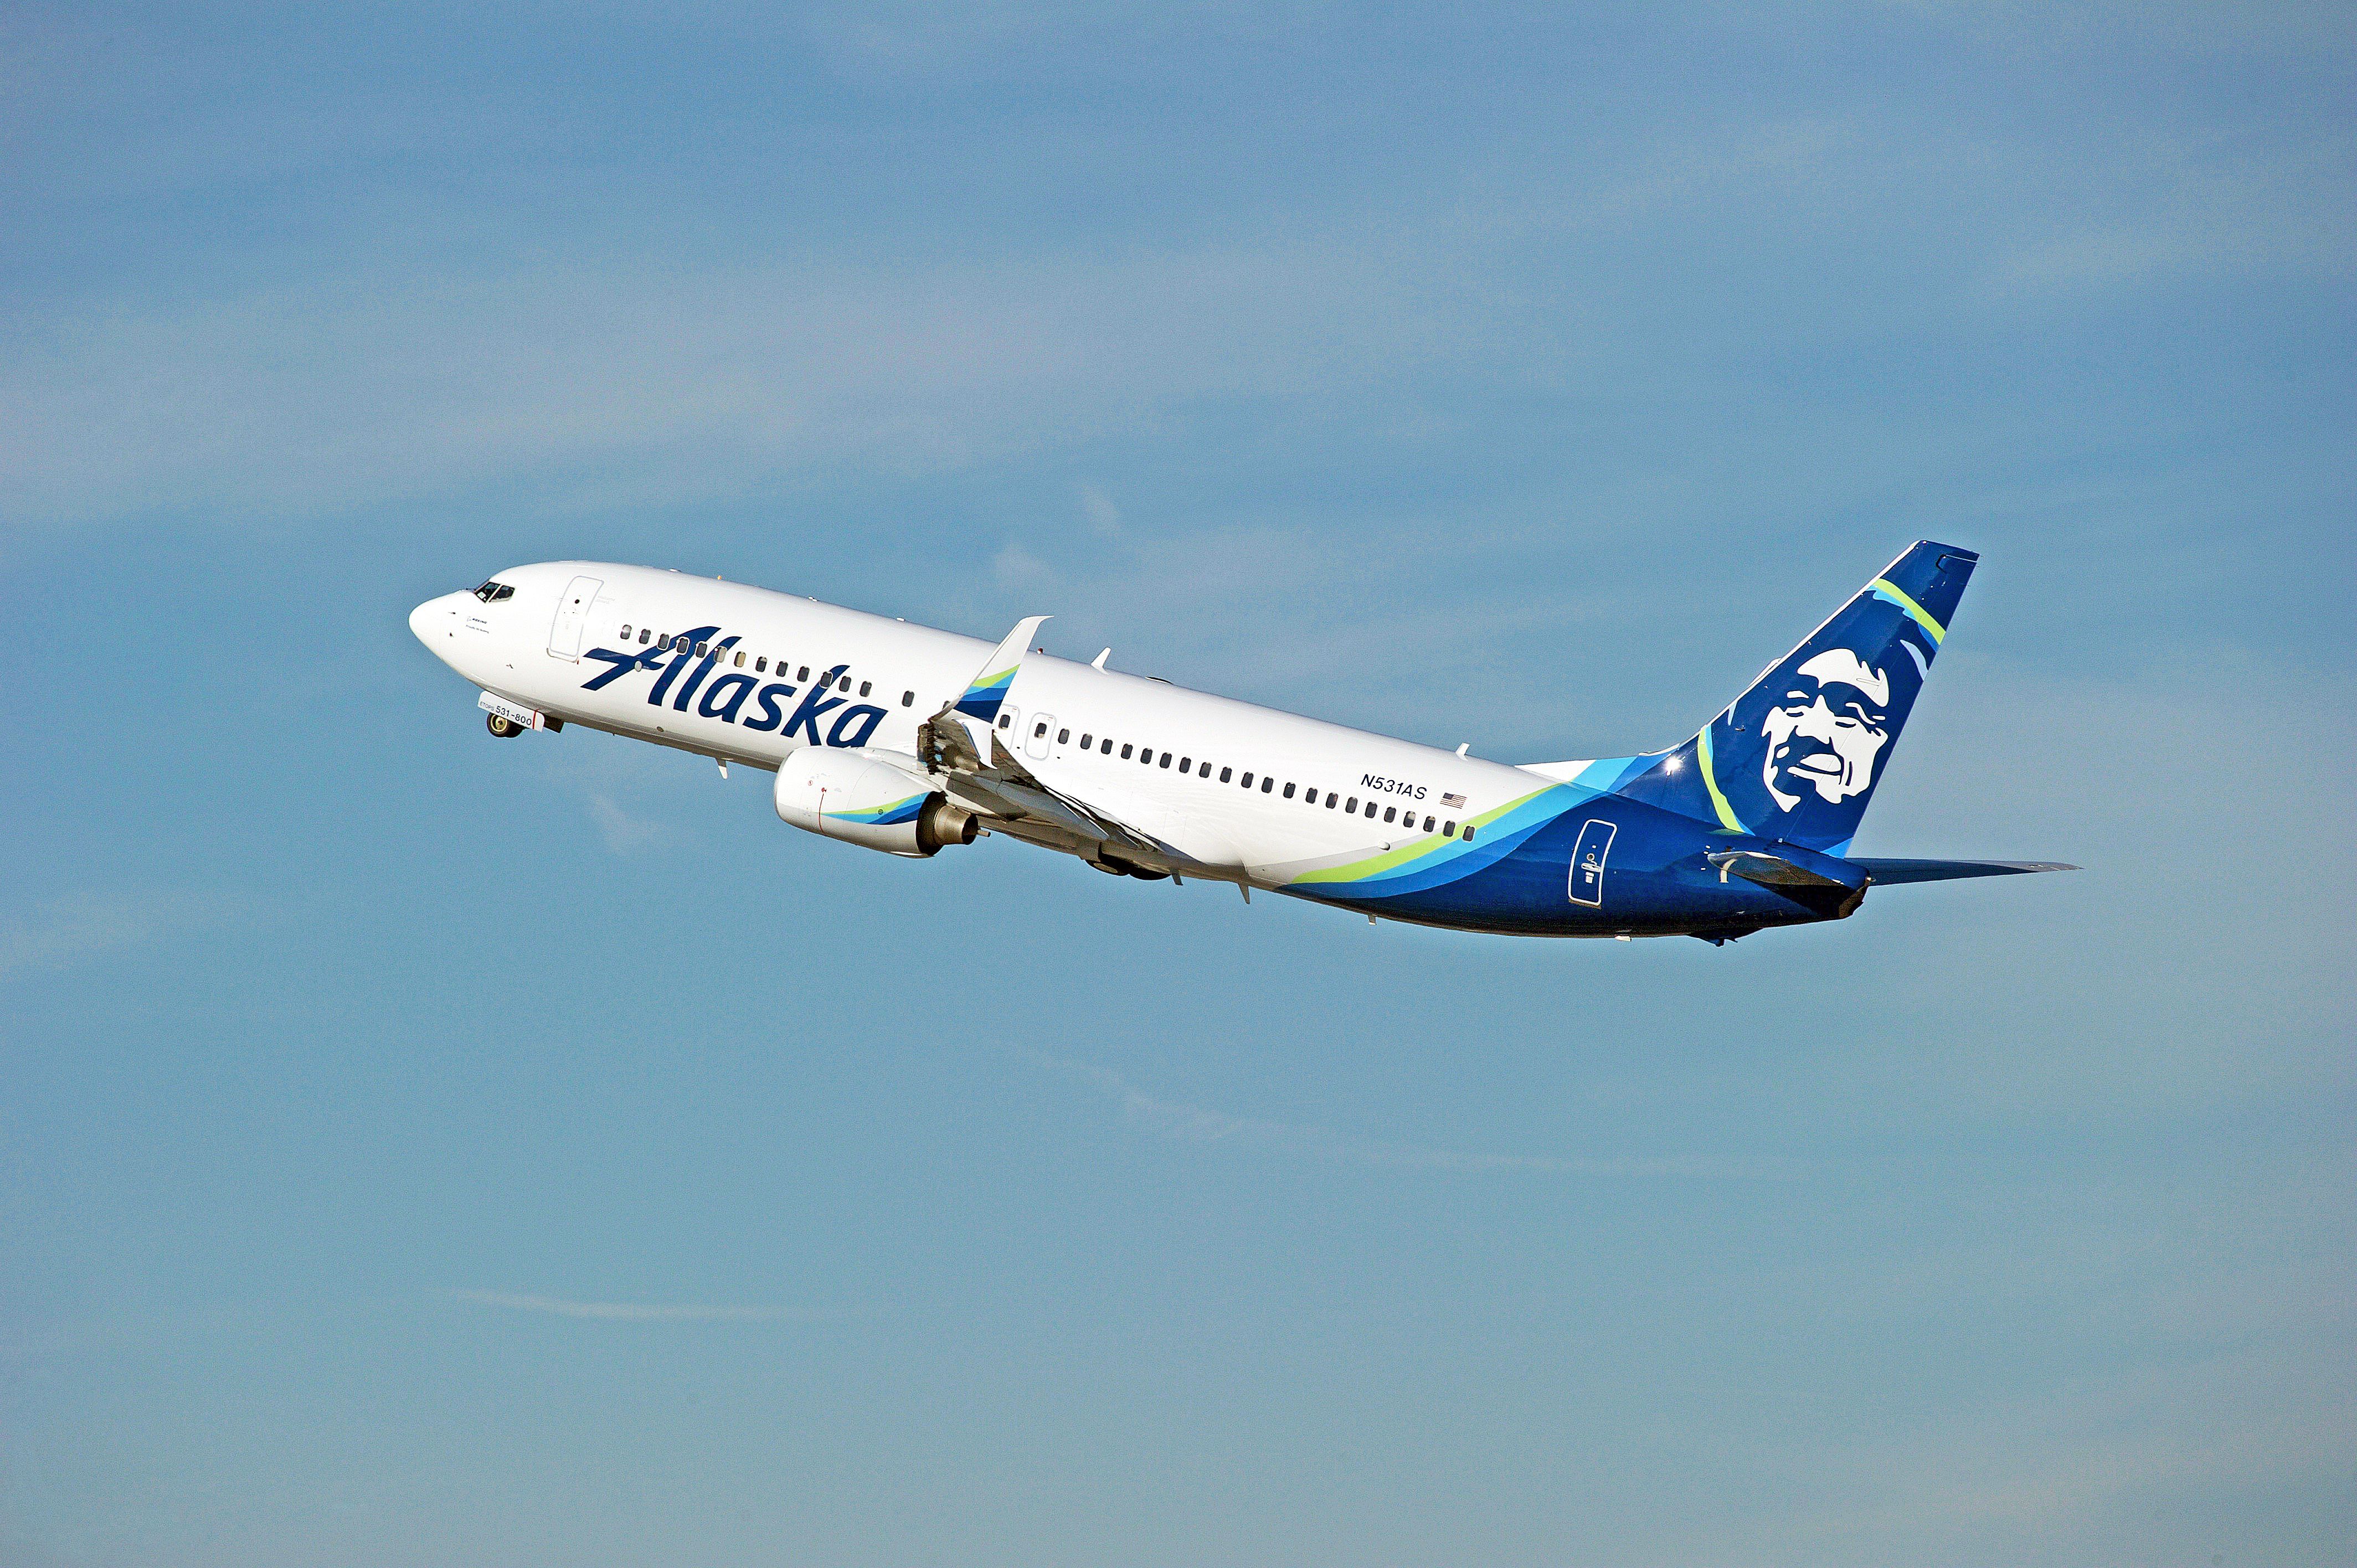 Alaska Airlines Boeing 737 Taking Off